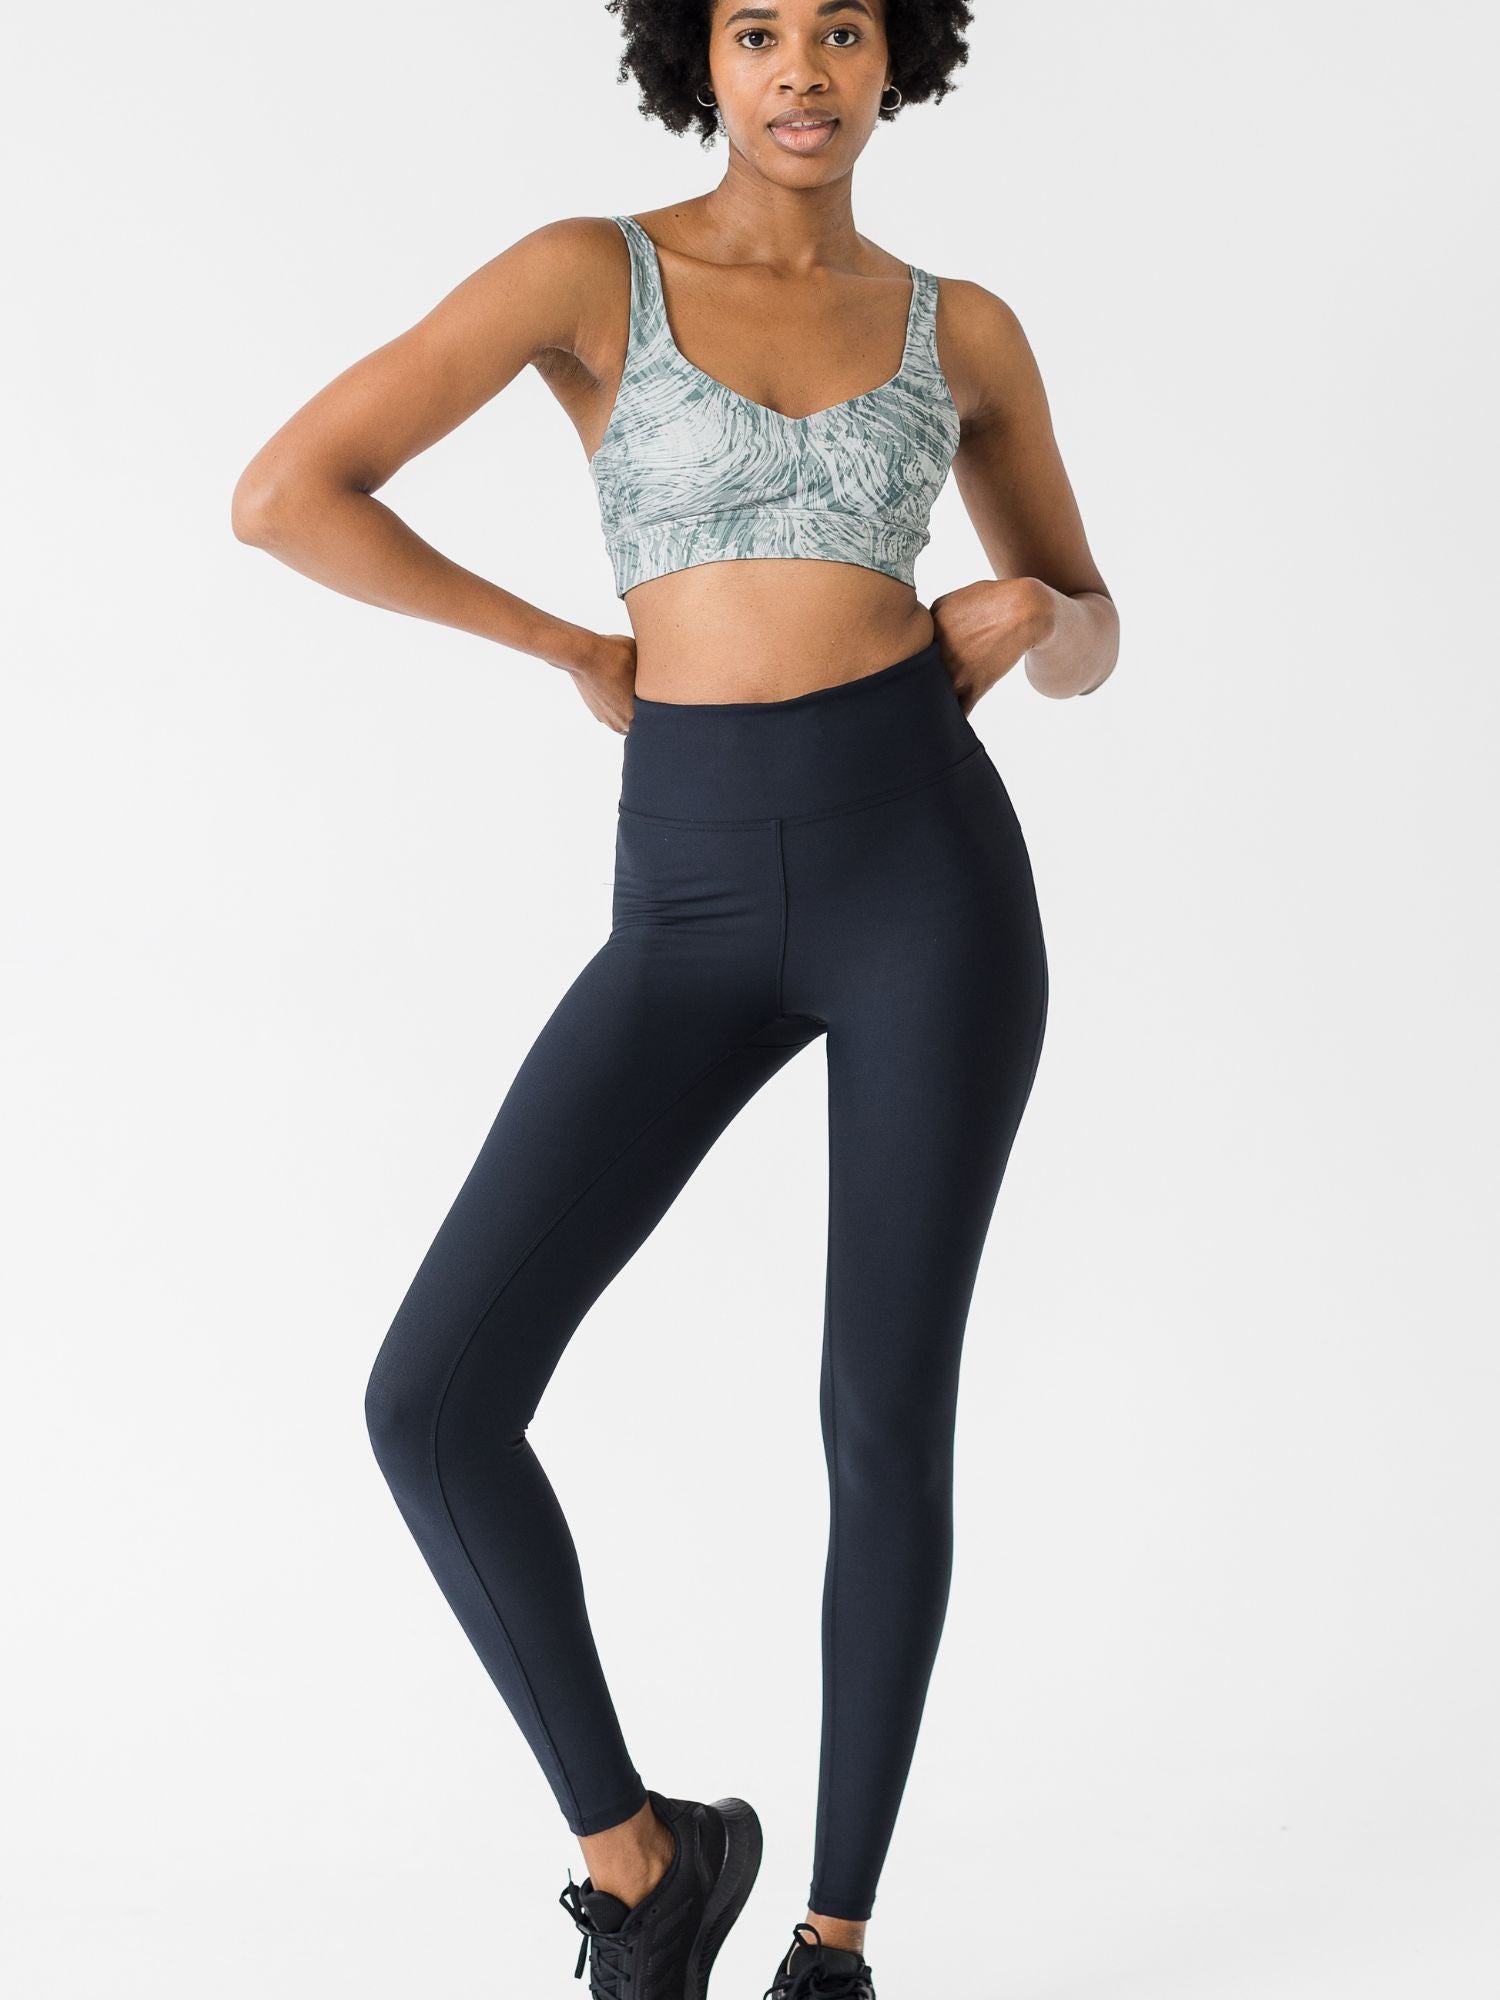 Hot Honeycomb Printed Yoga Pants Women Push Up Sport Leggings – Trending  Accessories | High waist sports leggings, Tights workout, Yoga pants women